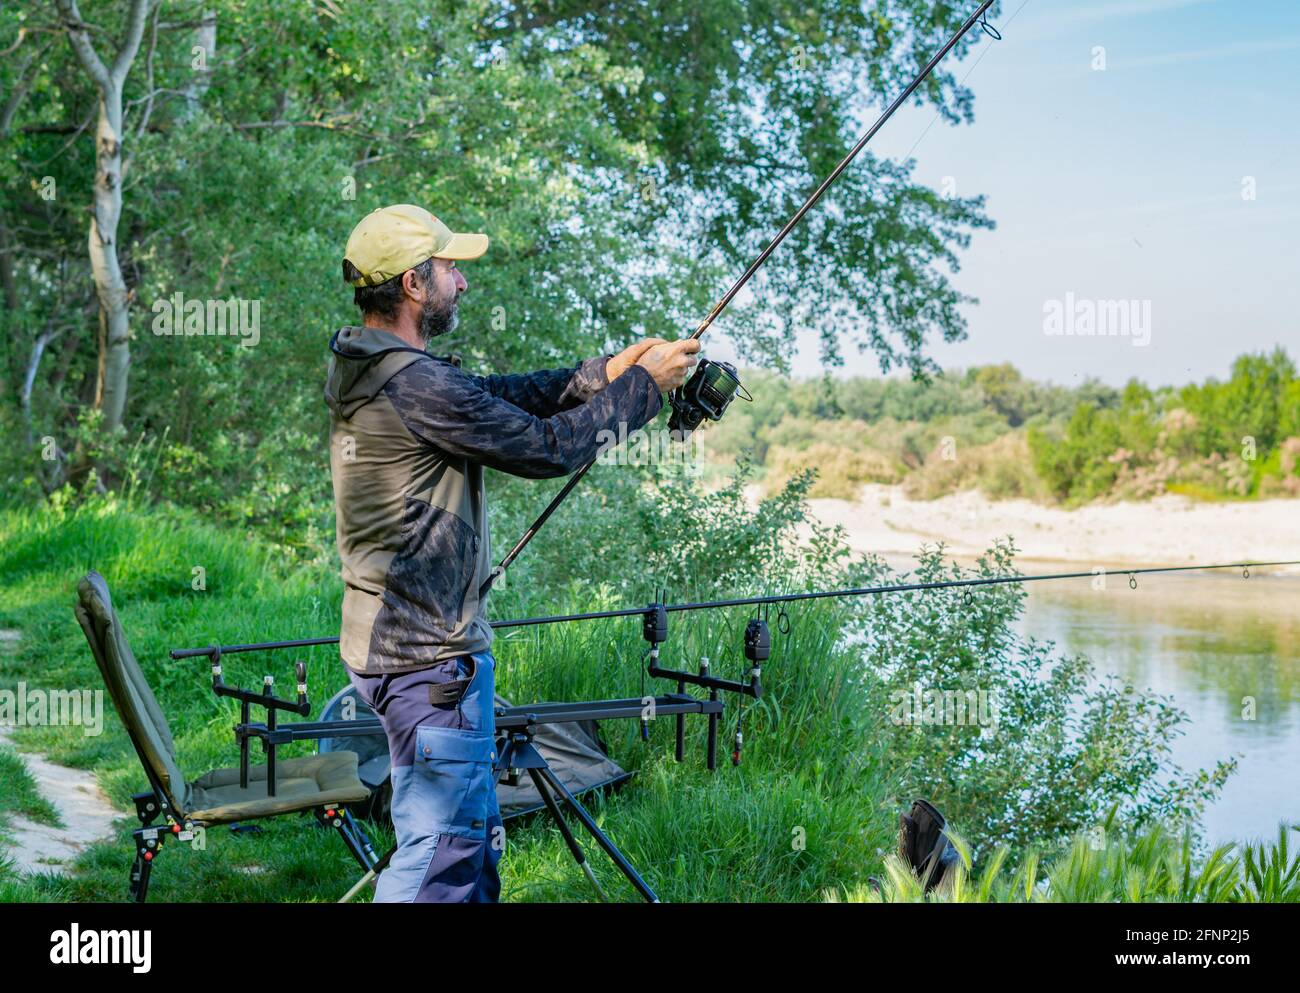 https://c8.alamy.com/comp/2FNP2J5/man-preparing-fishing-equipment-for-a-carp-fishing-session-on-the-rive-2FNP2J5.jpg